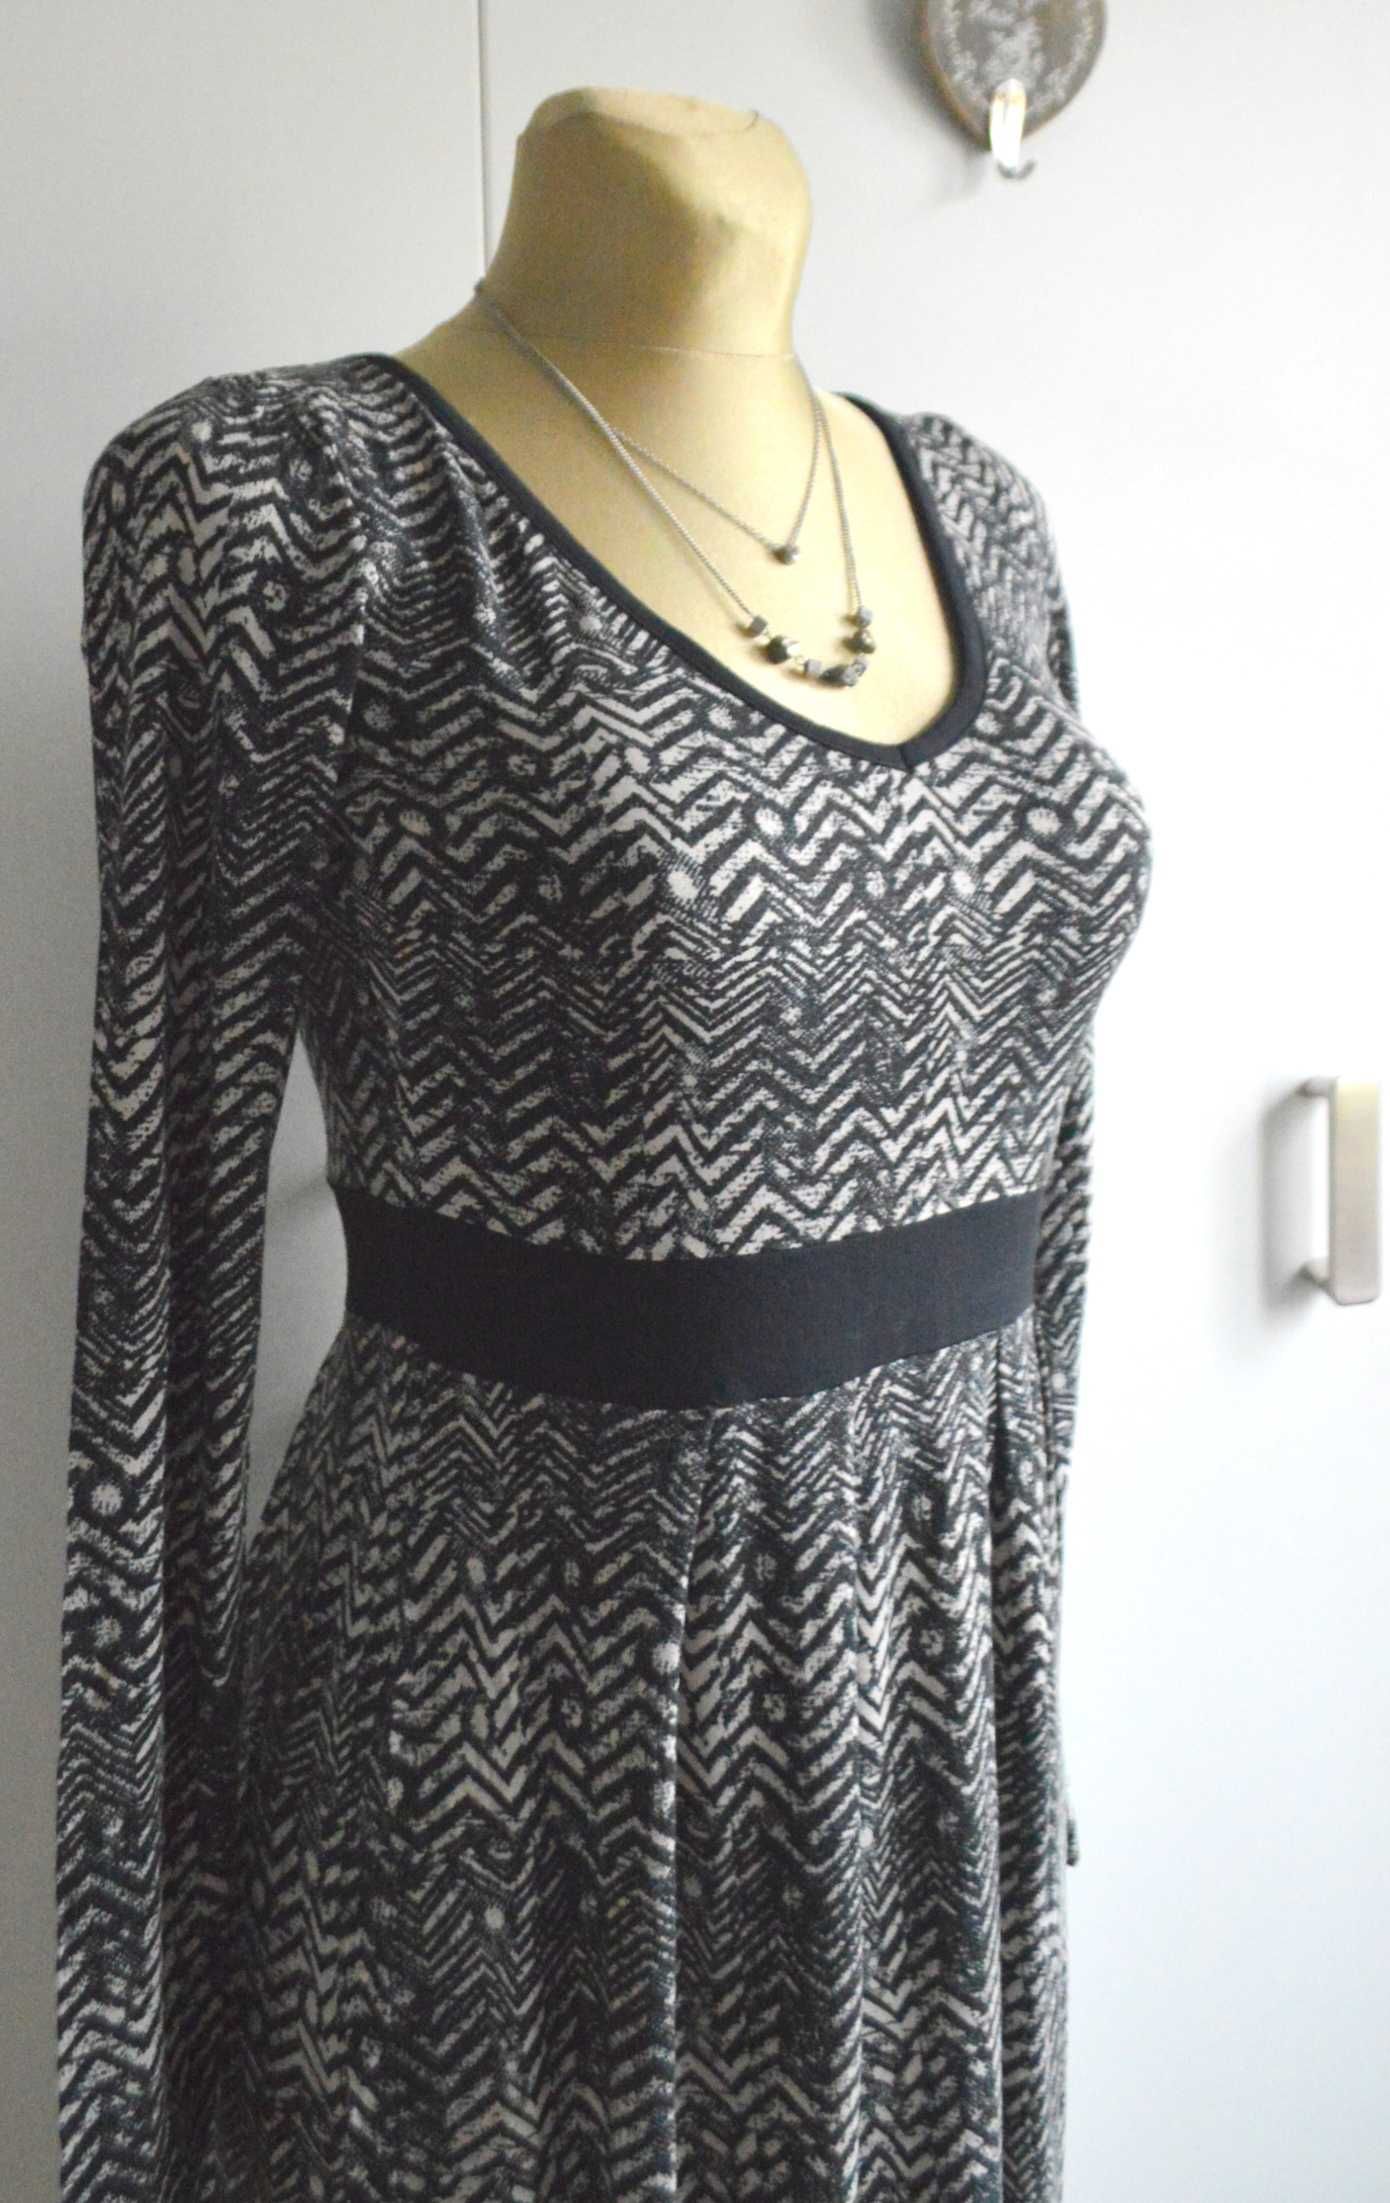 Tatuum sukienka S/M premium stylowa wzór print wiskoza minimalizm cos.